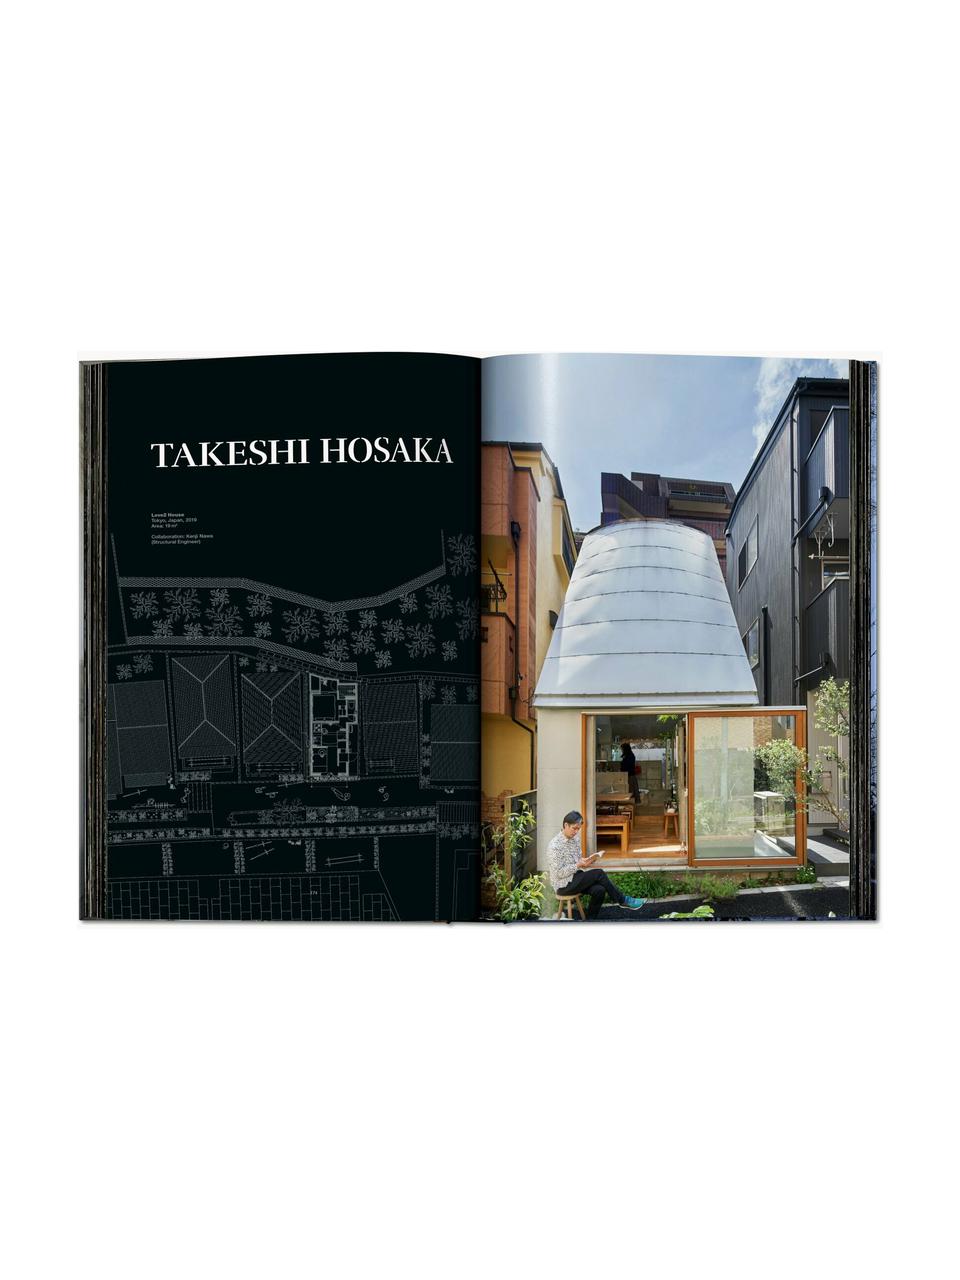 Album Homes for our Time - Small Houses, Papier, twarda okładka, Small Houses, S 25 x W 37 cm